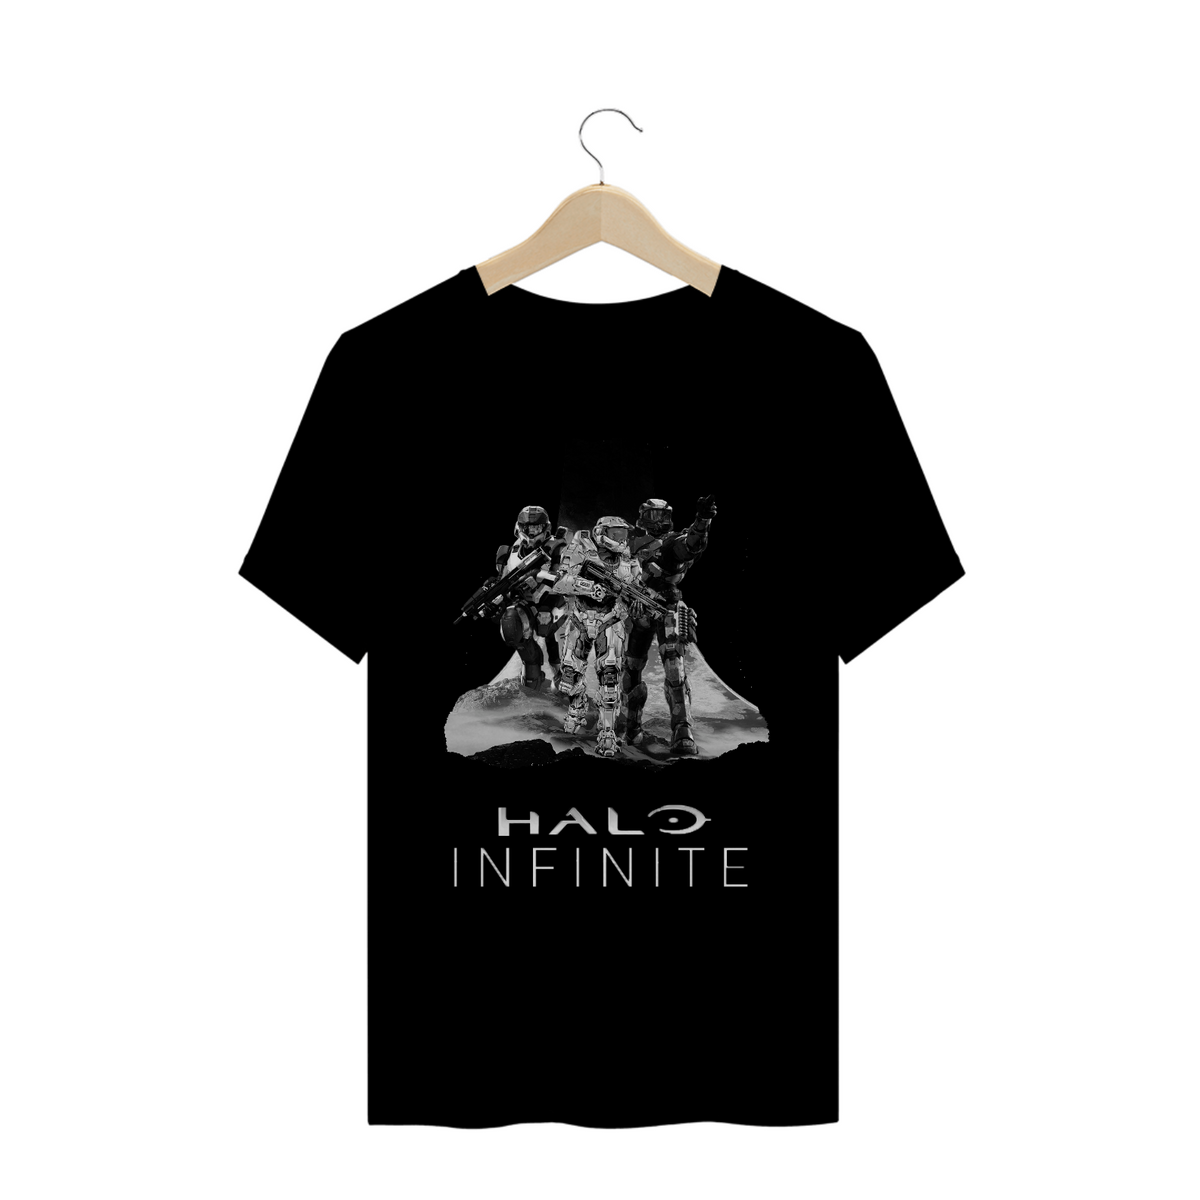 Nome do produto: Halo infinite 